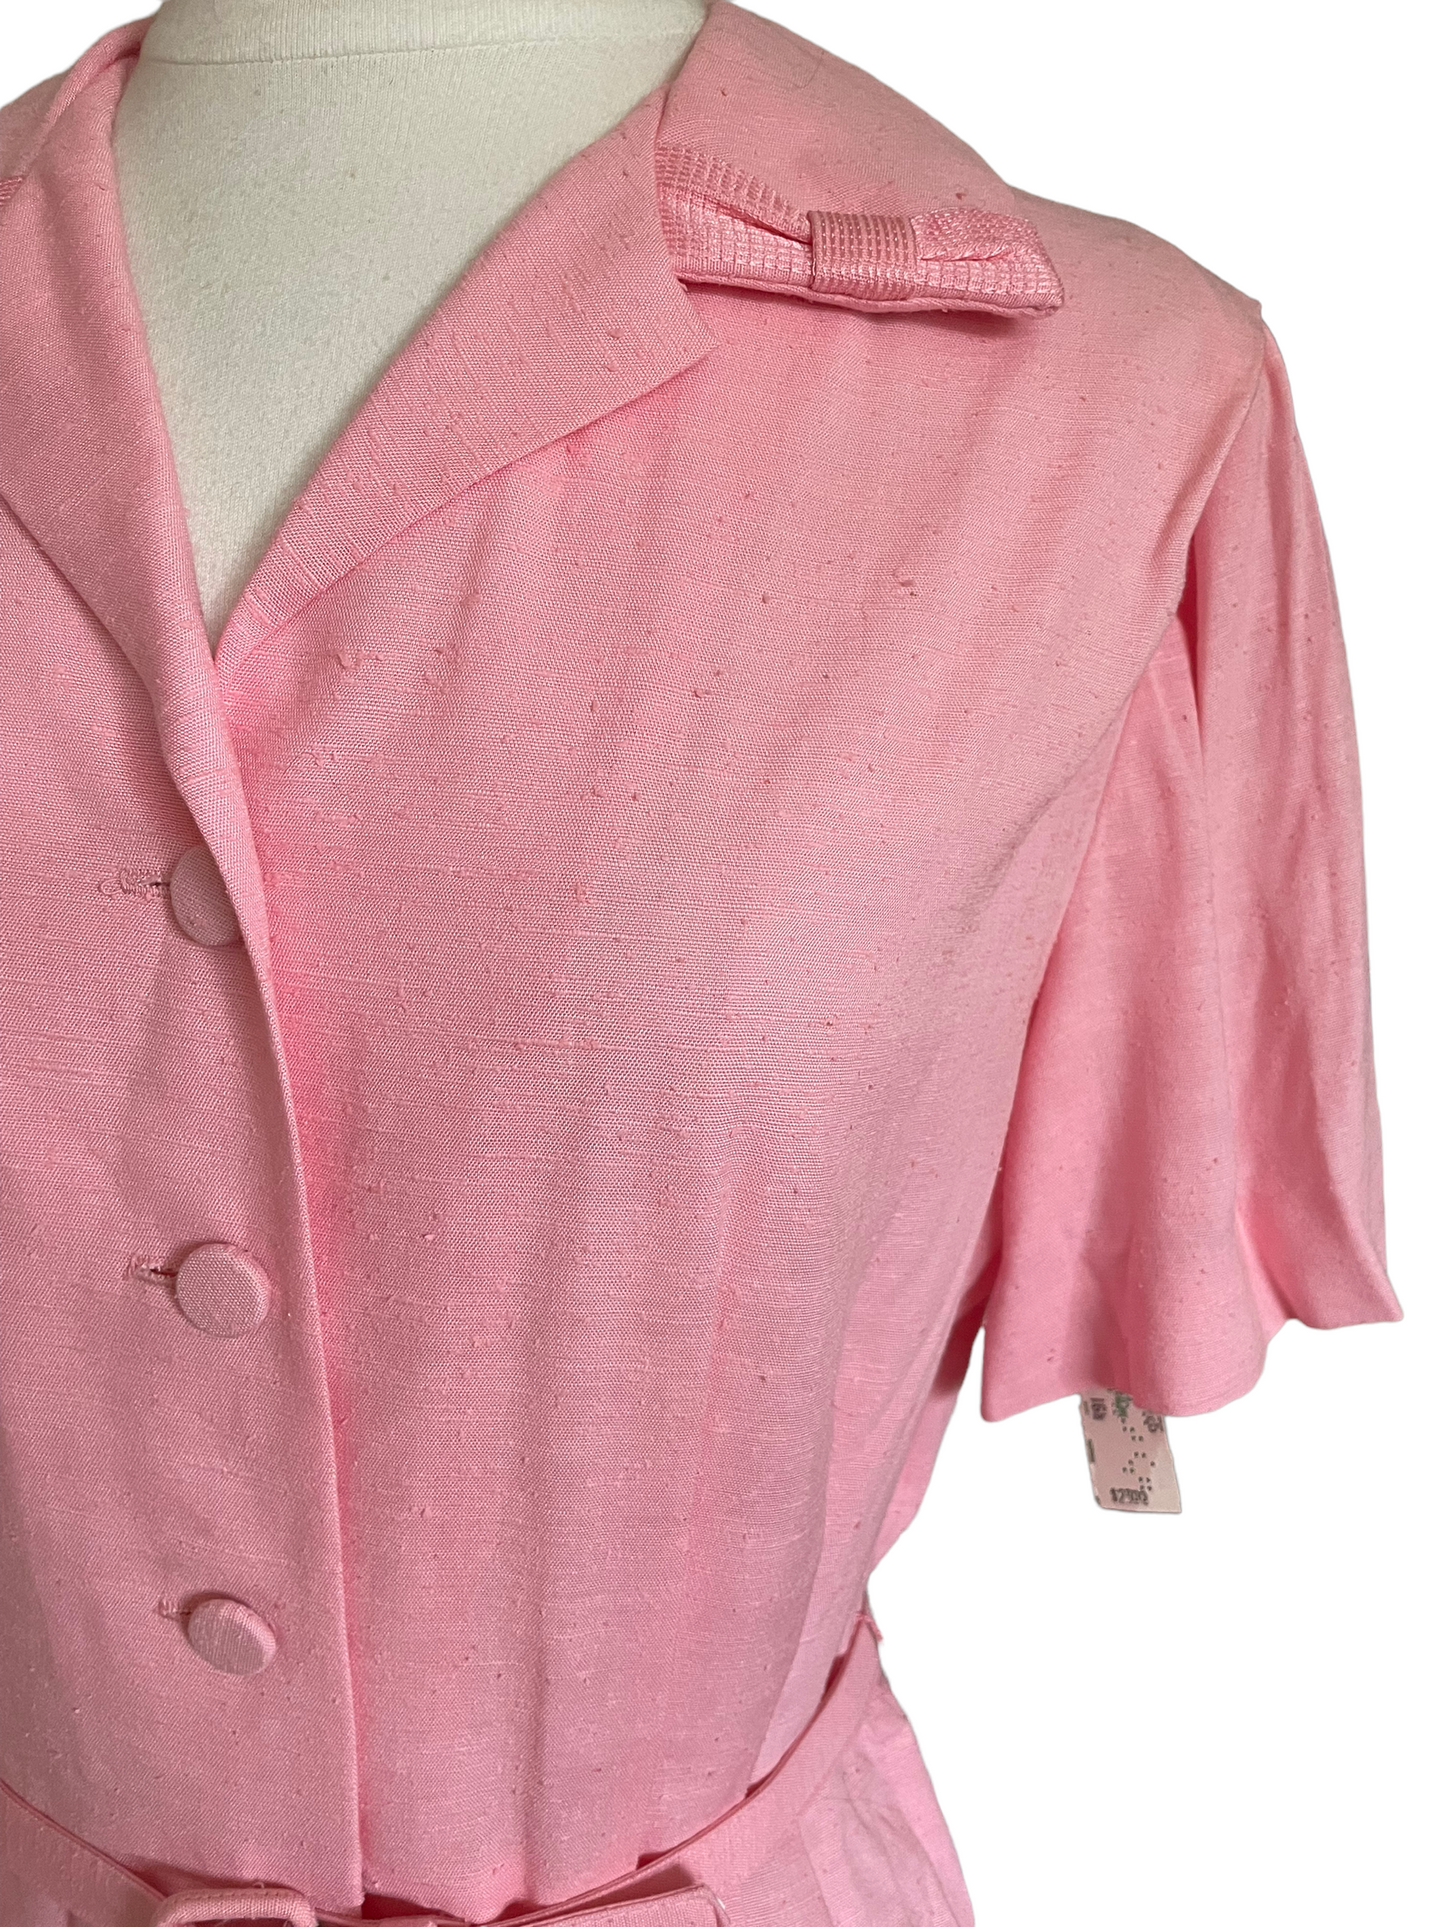 Vintage 1950s Deadstock Lordleigh Light Pink Silk and Rayon Dress SZ M |  Barn Owl Vintage | Seattle Vintage Dresses Front left shoulder view.